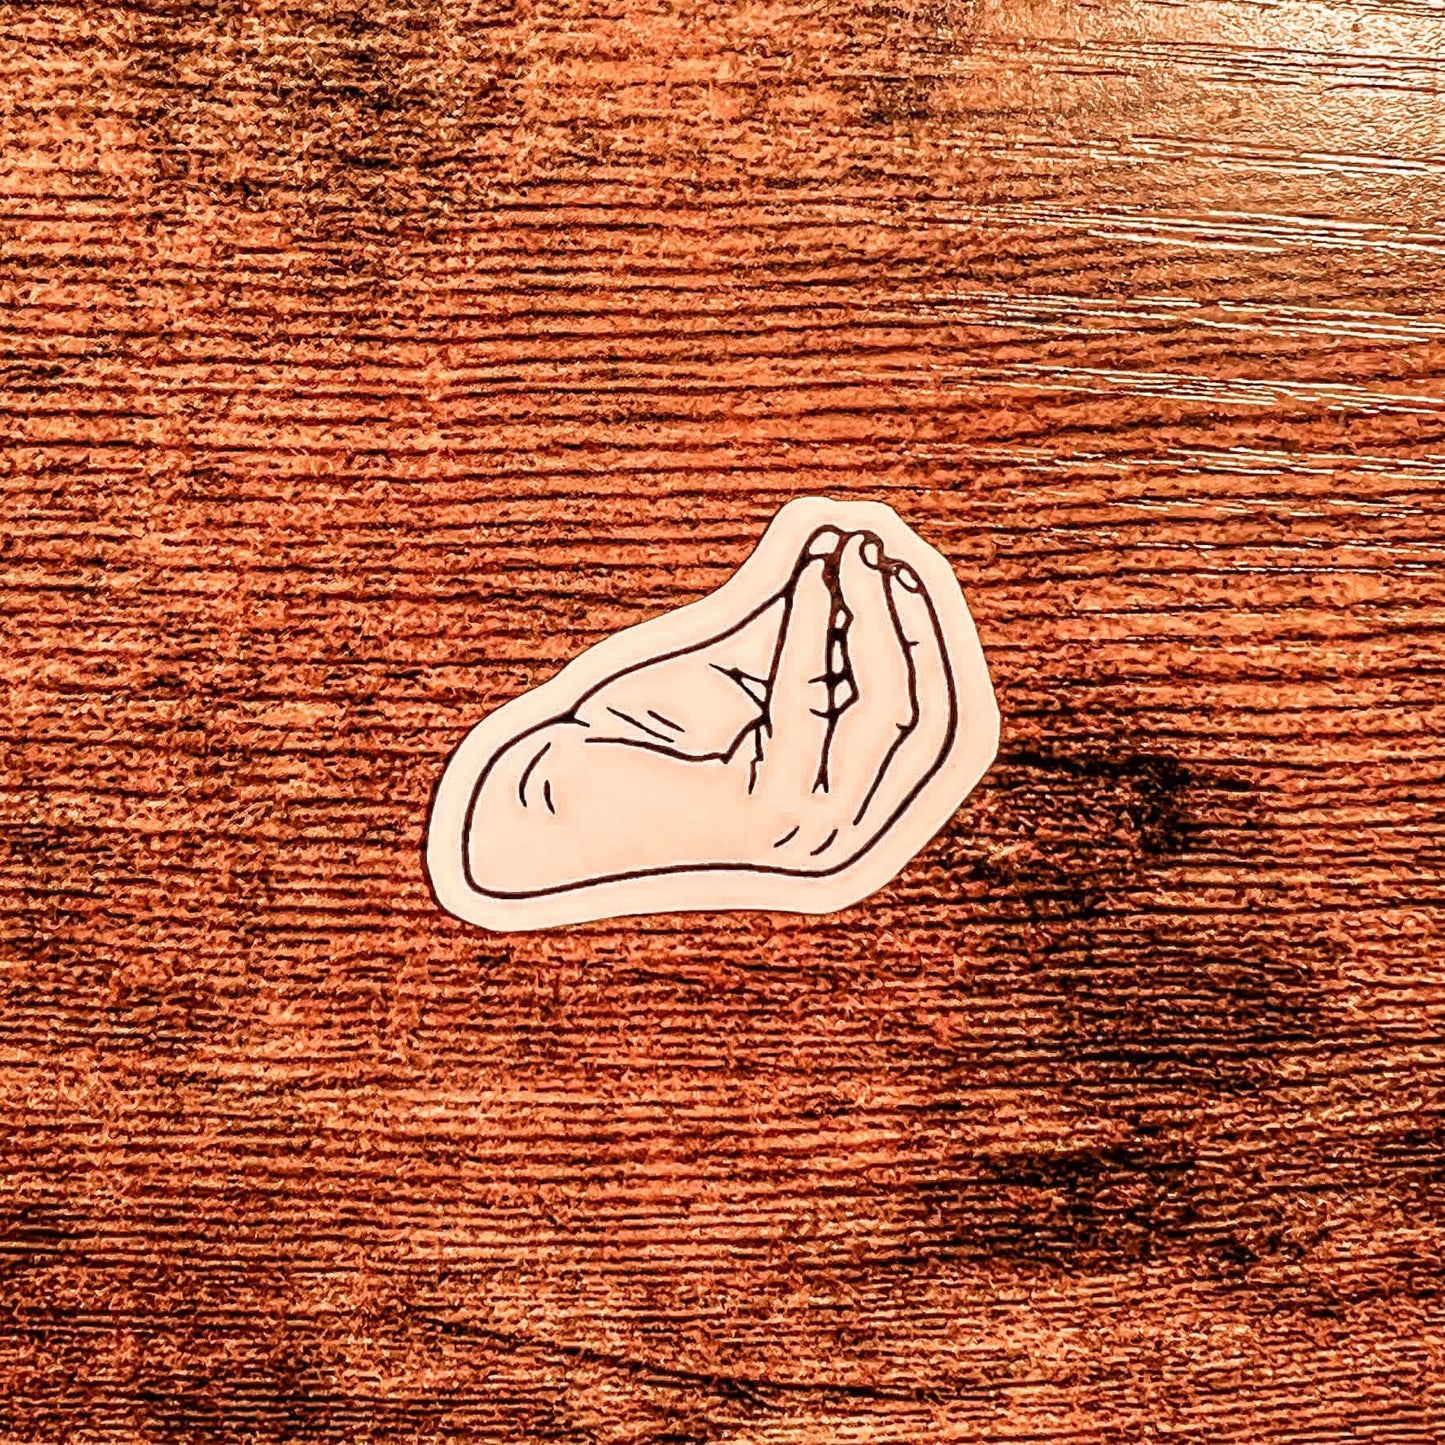 Italian Hand Gesture Sticker